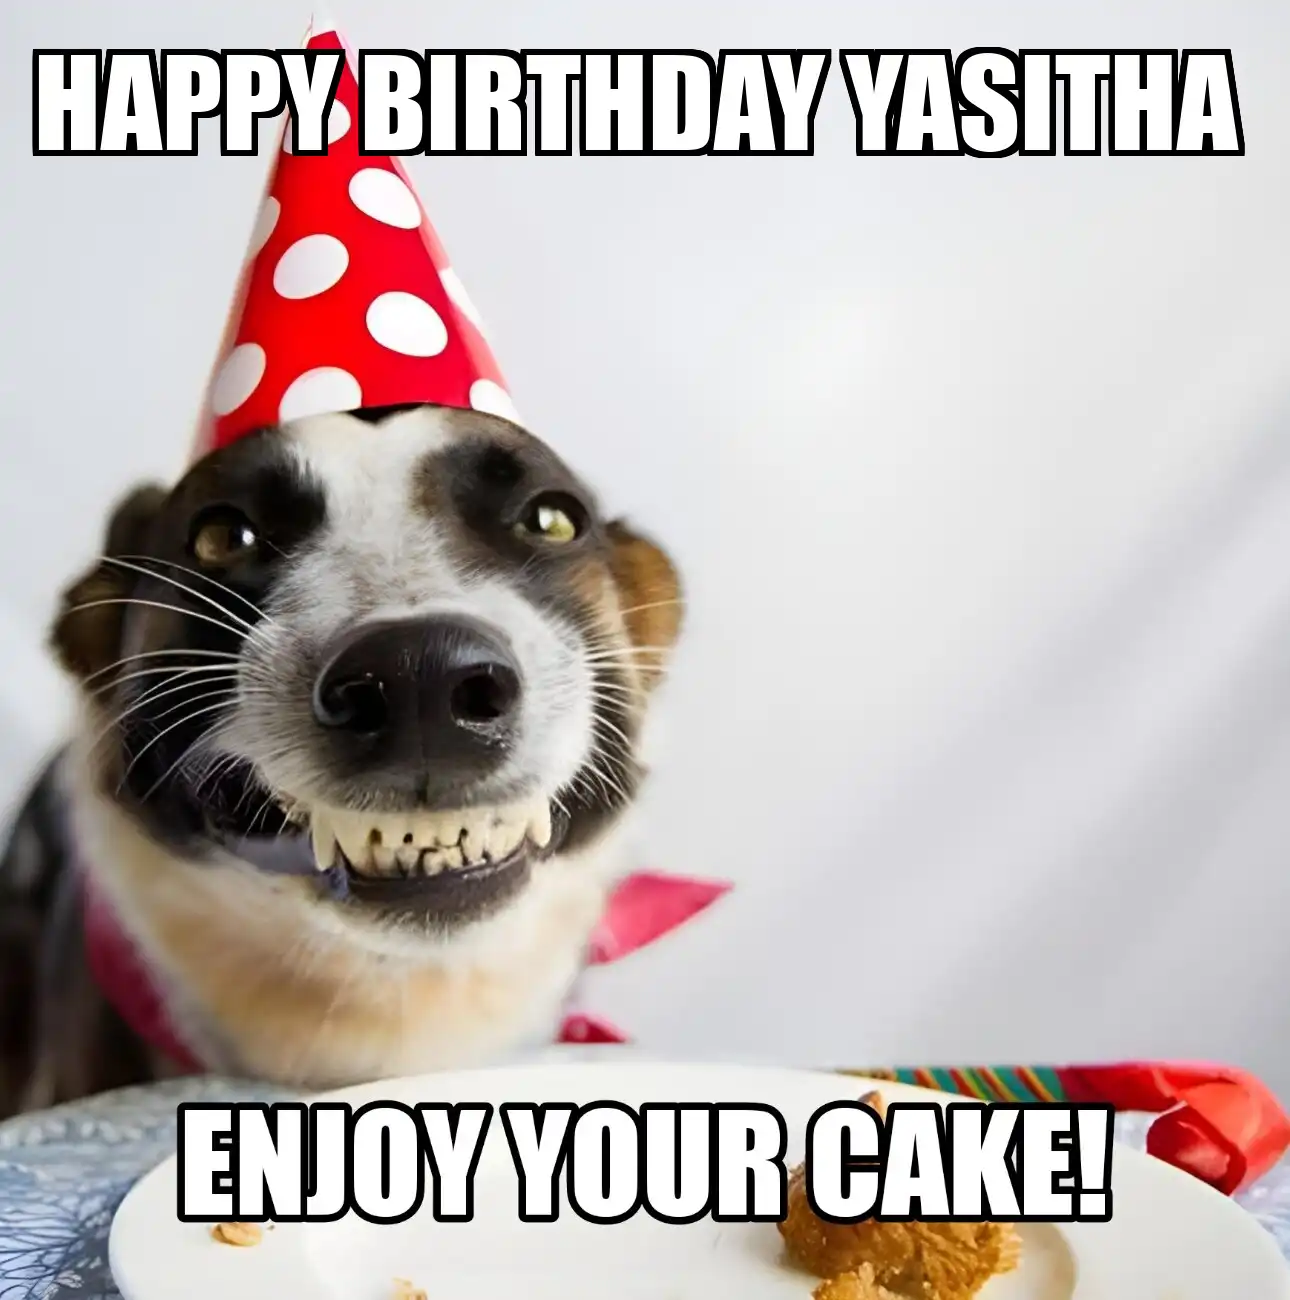 Happy Birthday Yasitha Enjoy Your Cake Dog Meme